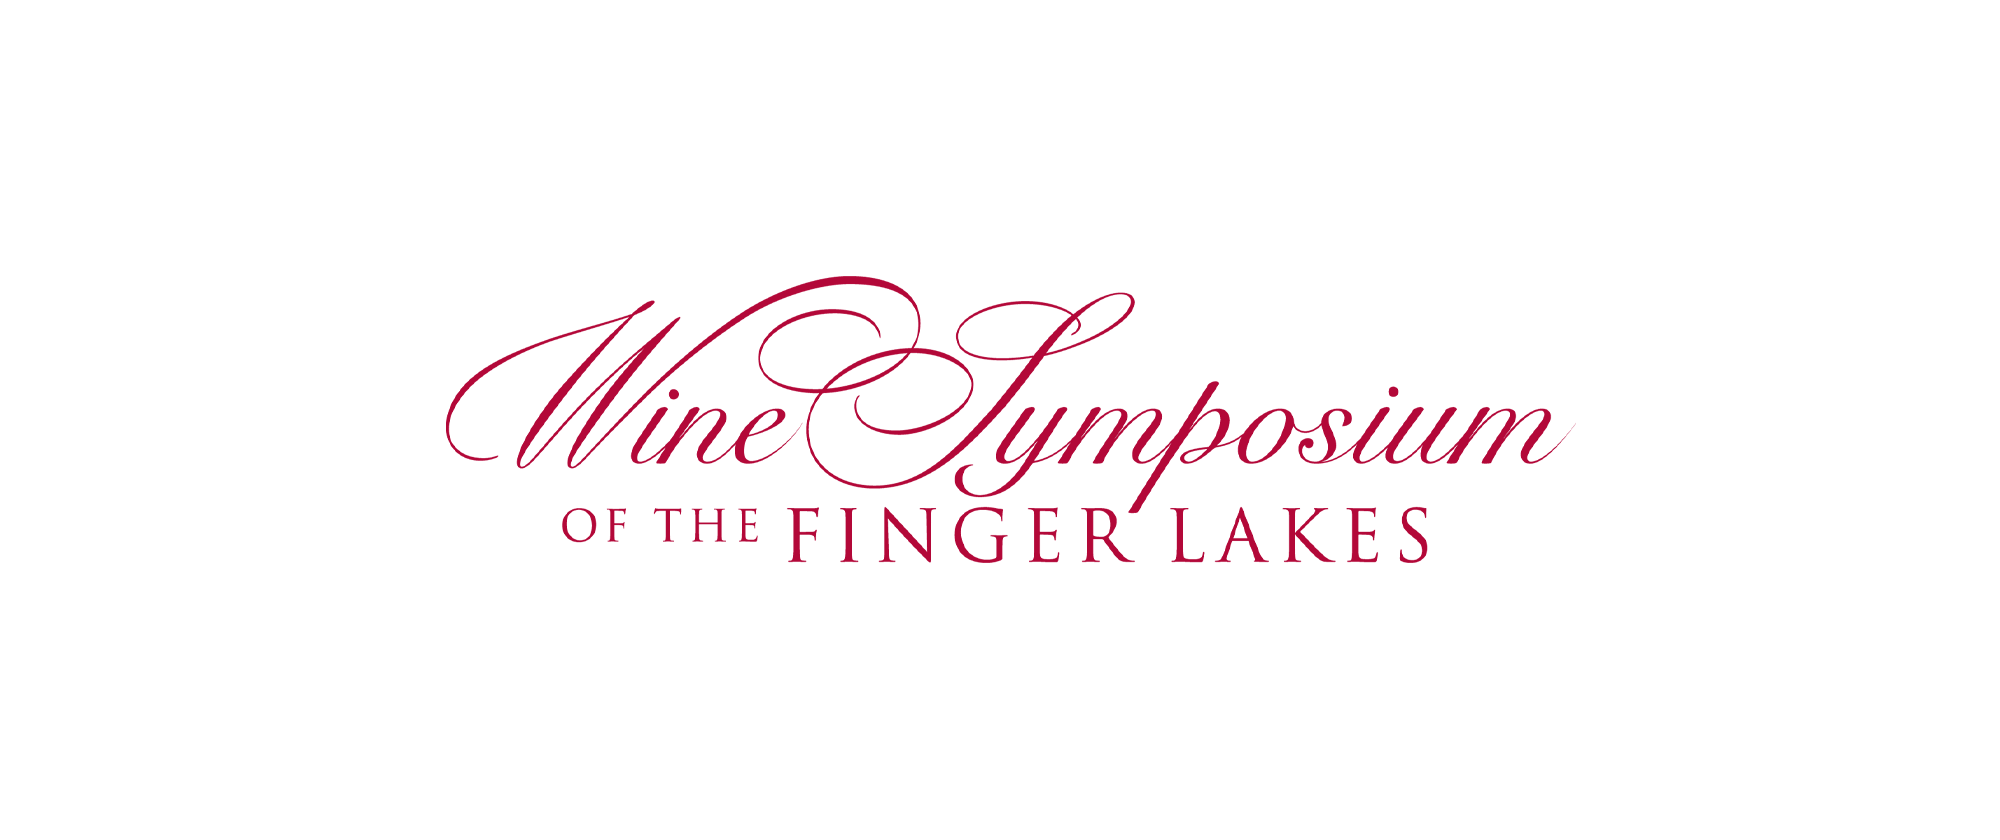 Wine Symposium of the Finger Lakes